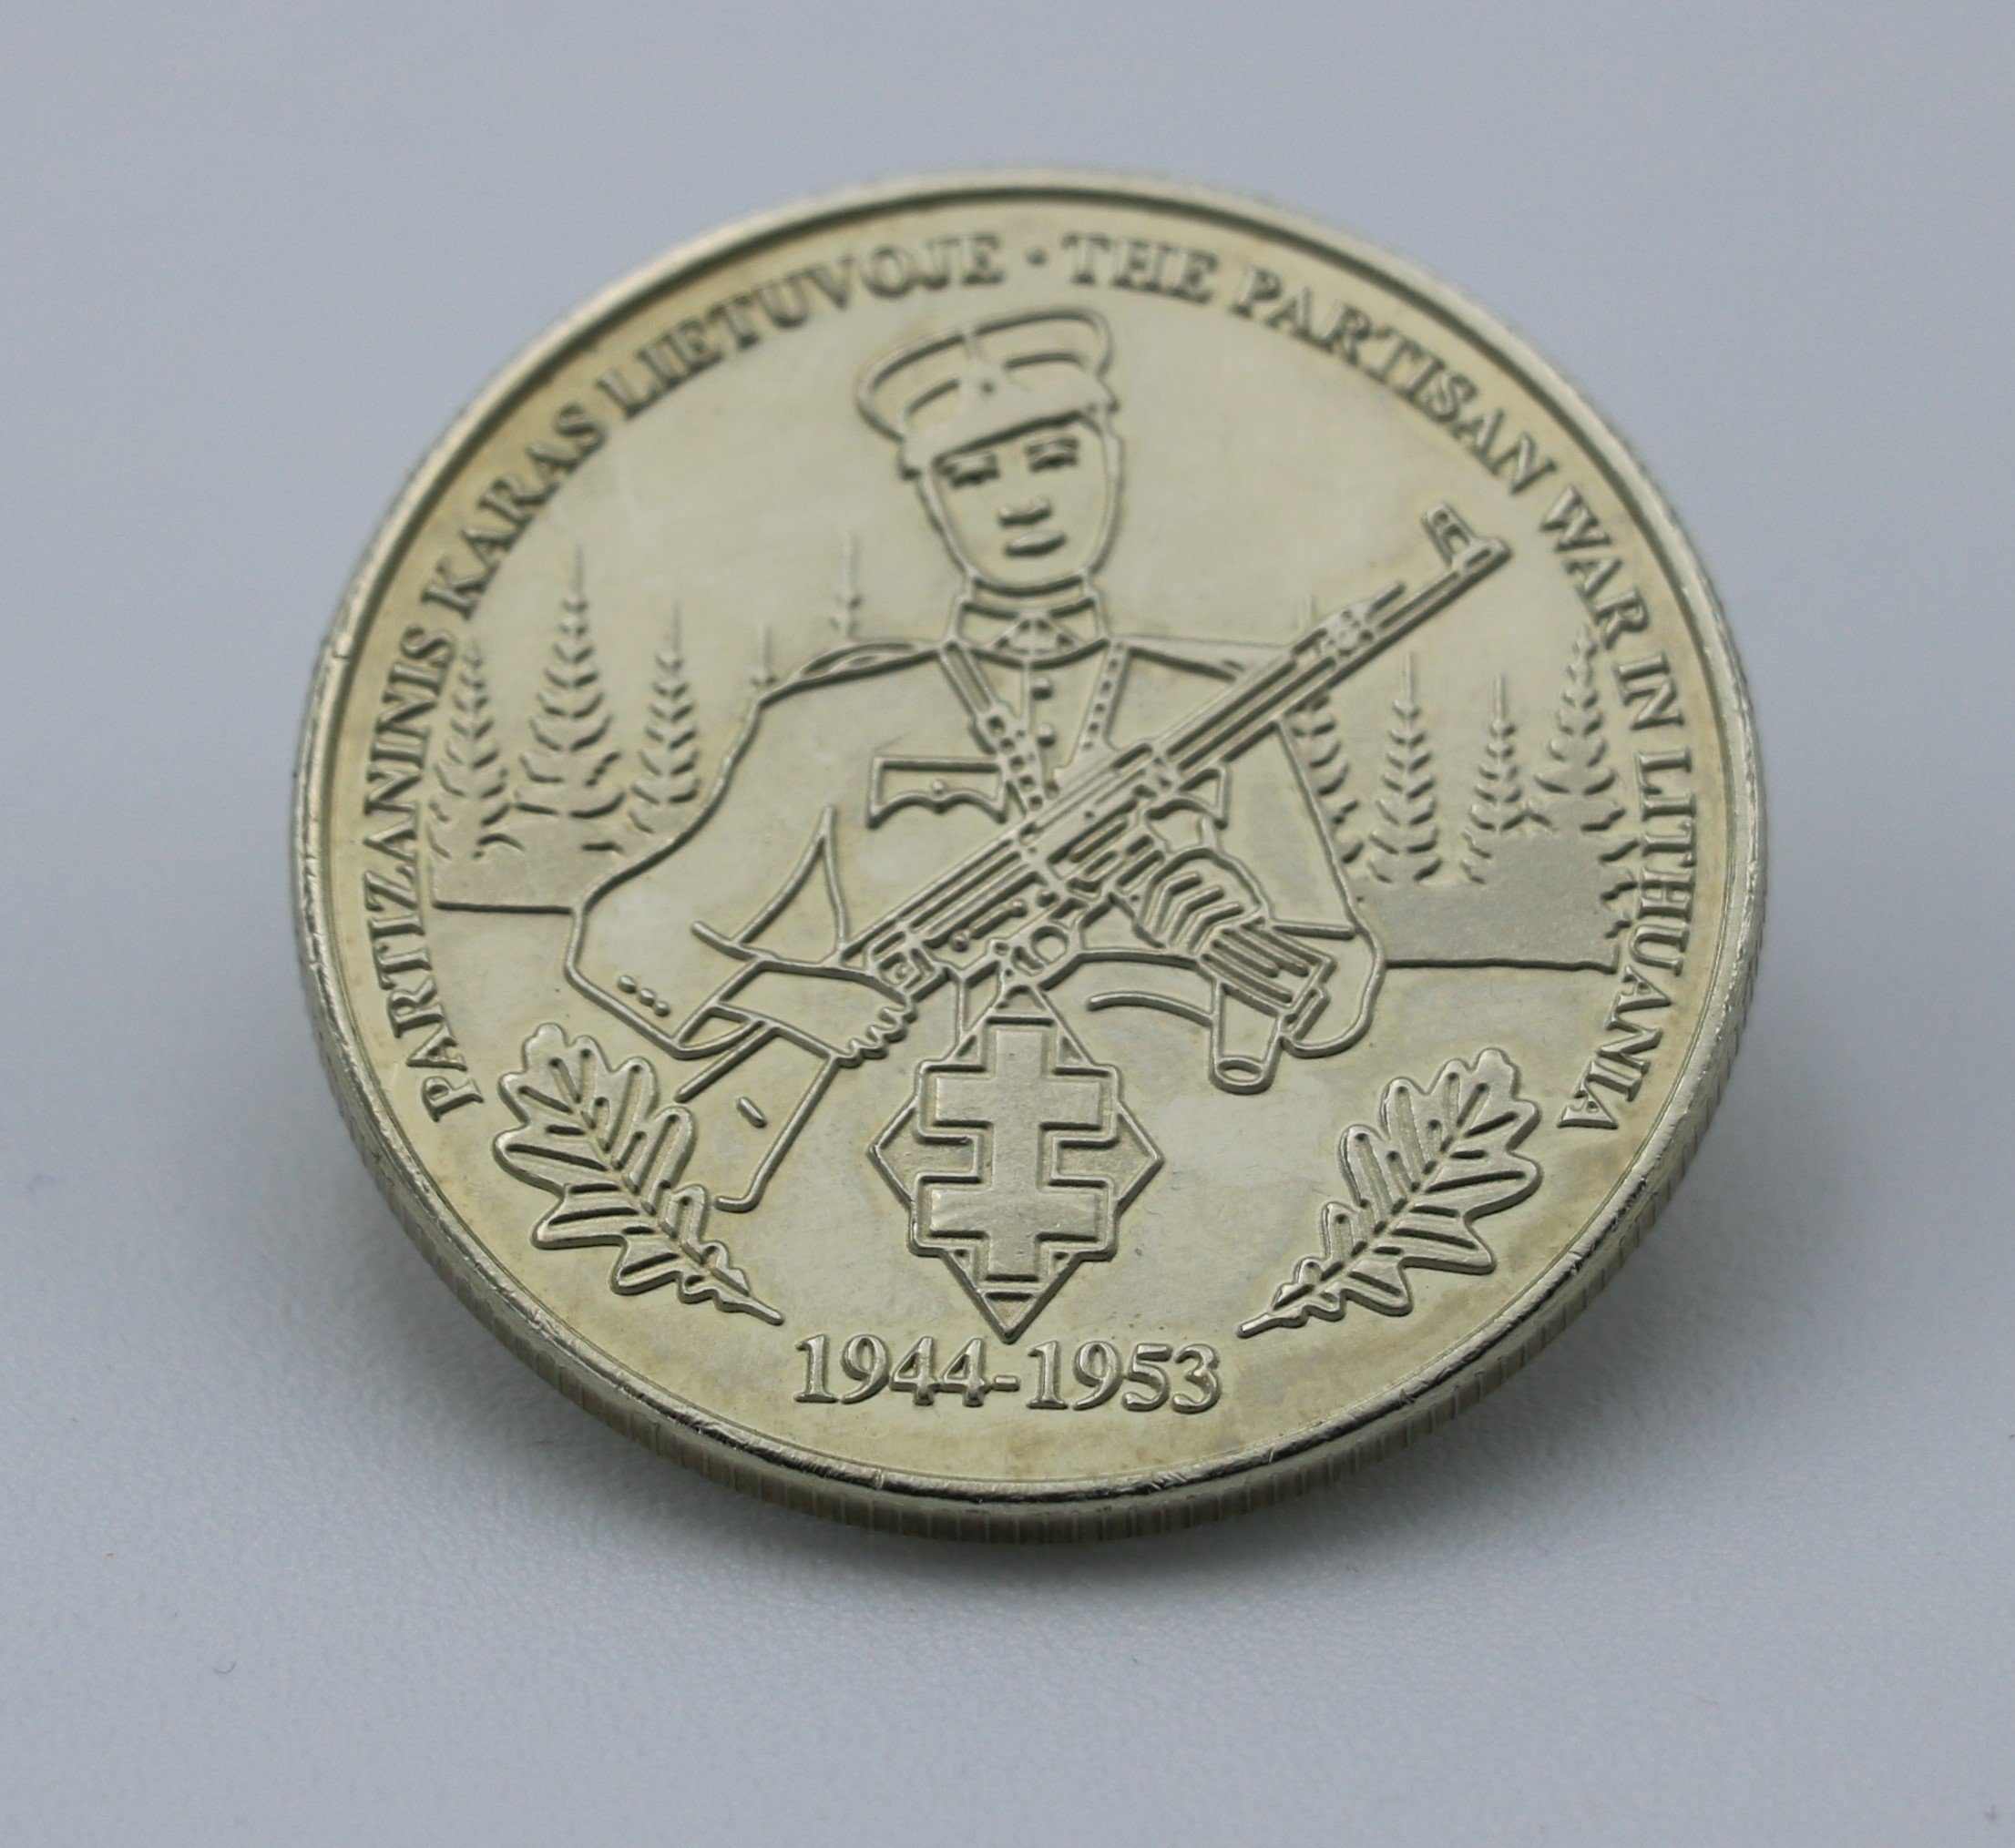 Medaille aus Litauen zum Partisanenkampf 1944-1953 (Museum Berlin-Karlshorst CC BY-NC-SA)